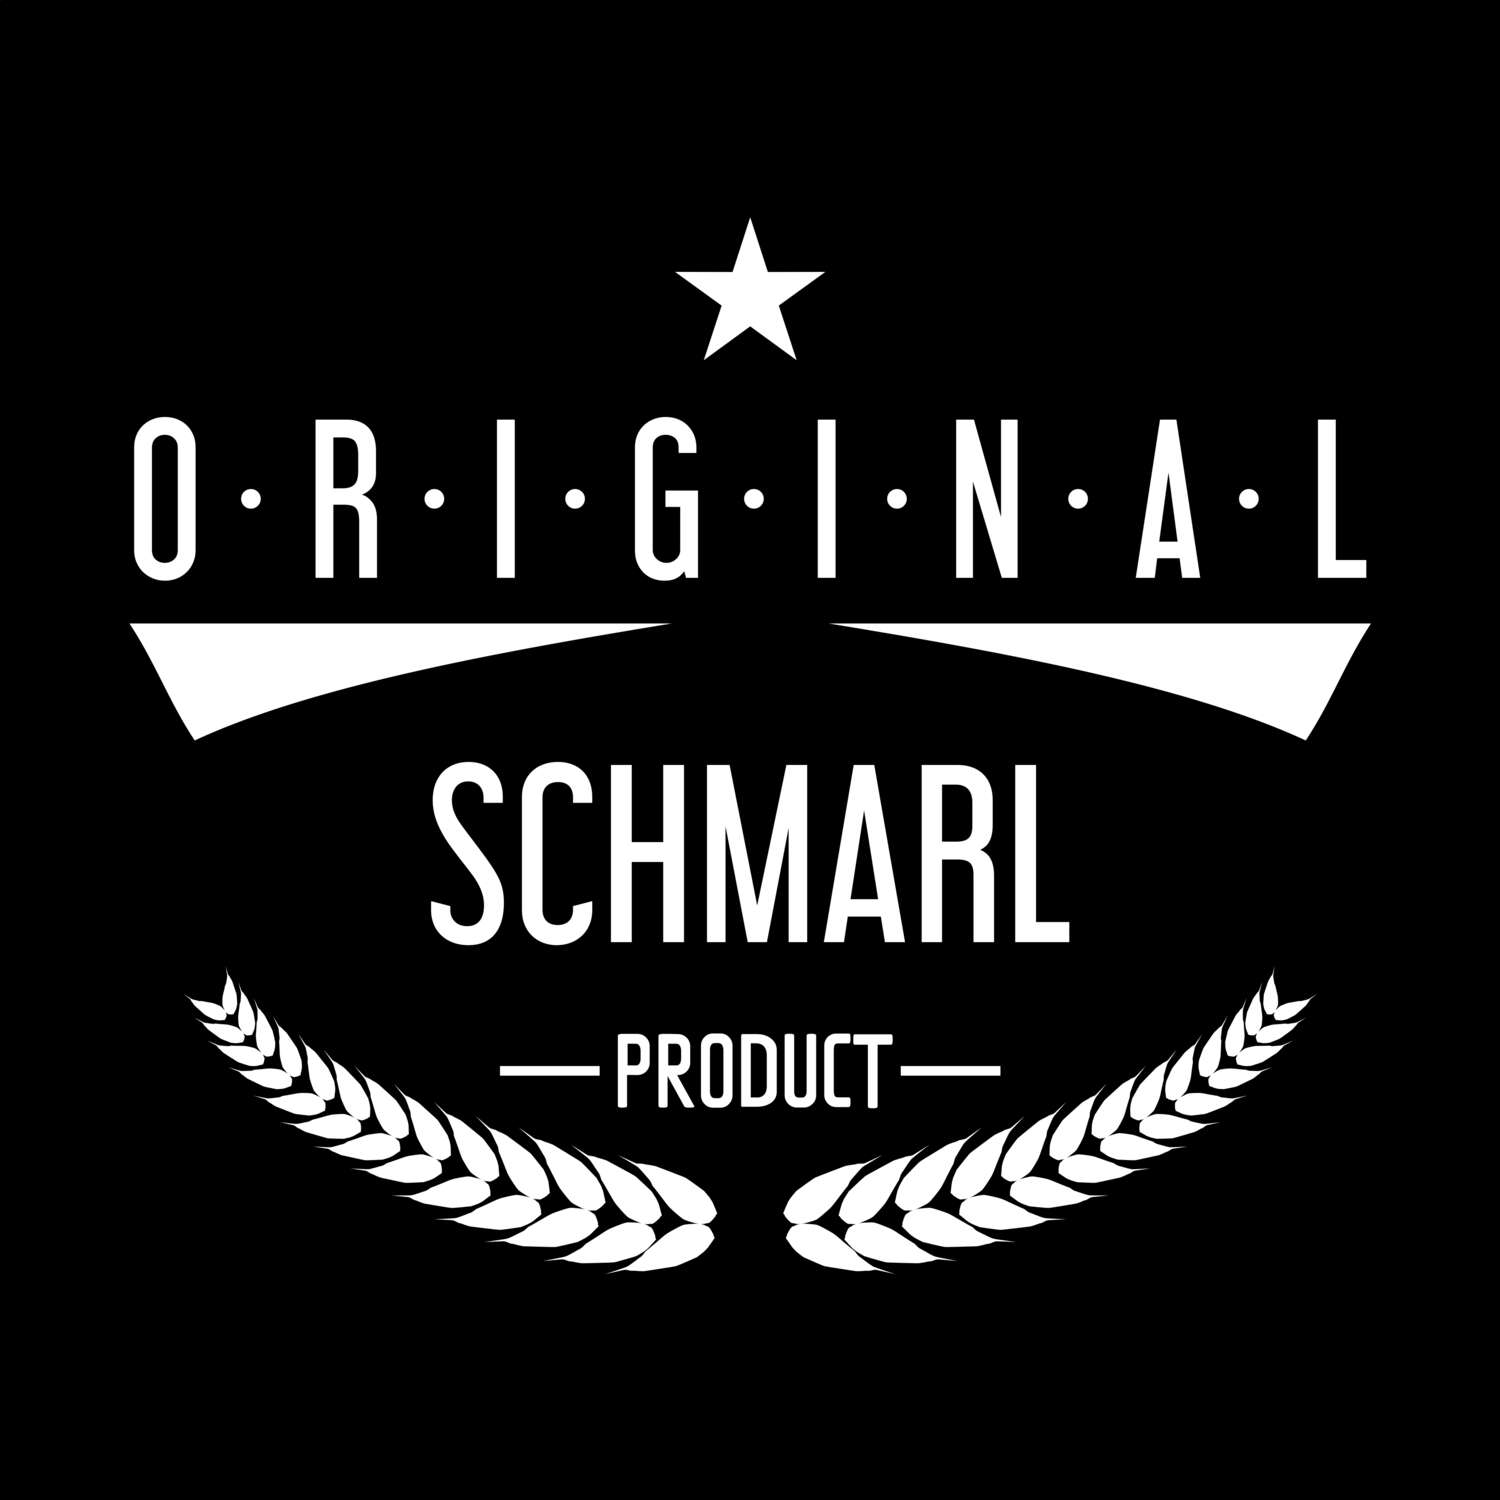 Schmarl T-Shirt »Original Product«